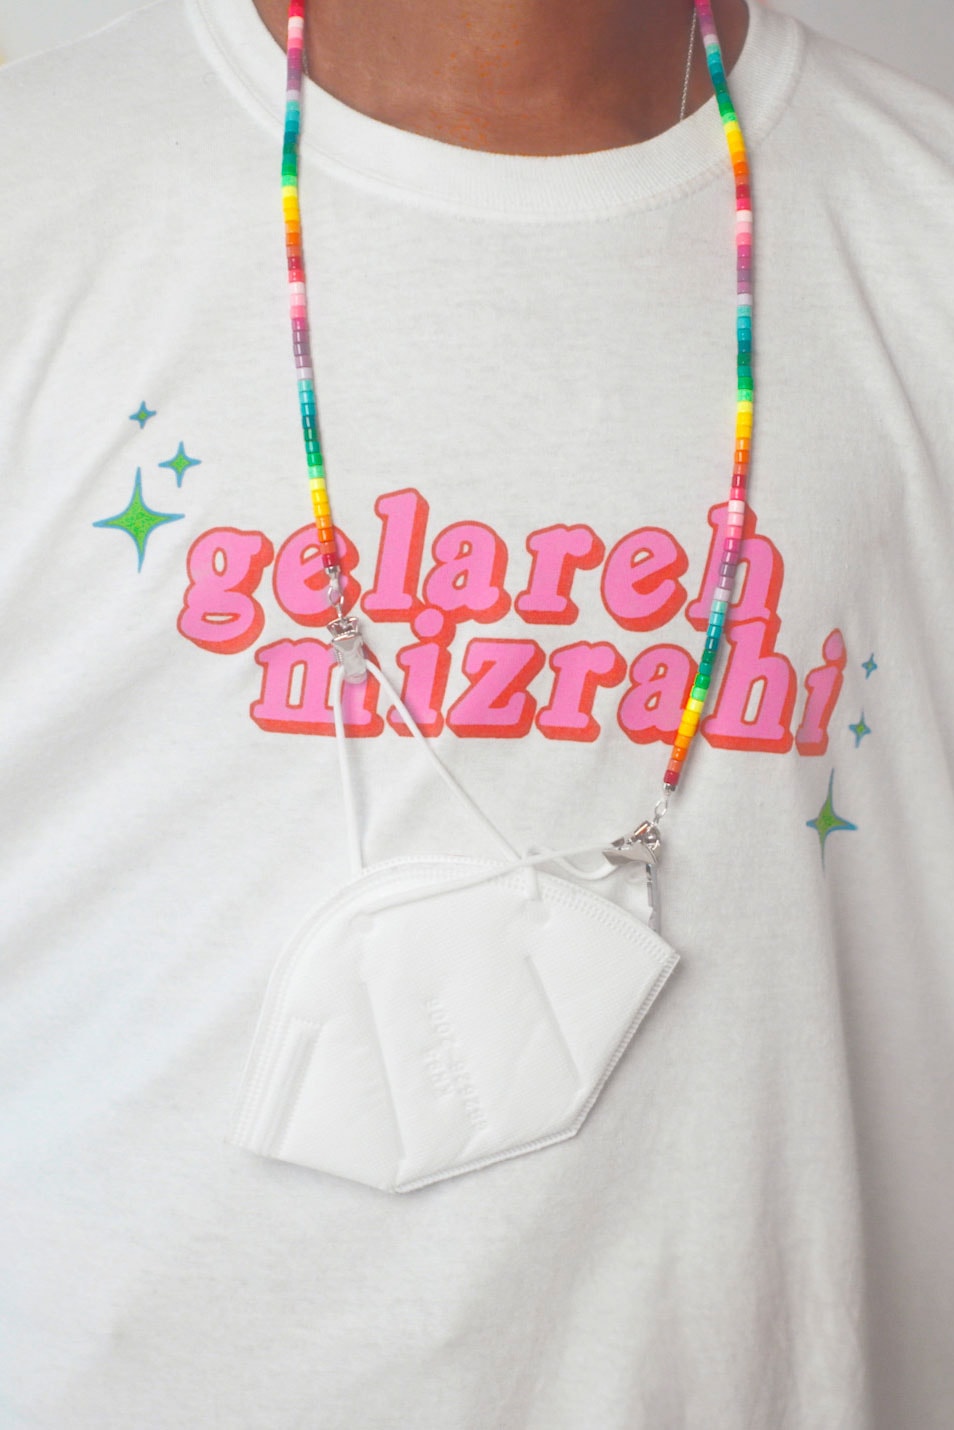 Gelareh Mizrahi Face Mask Strap Holder Rainbow Necklace